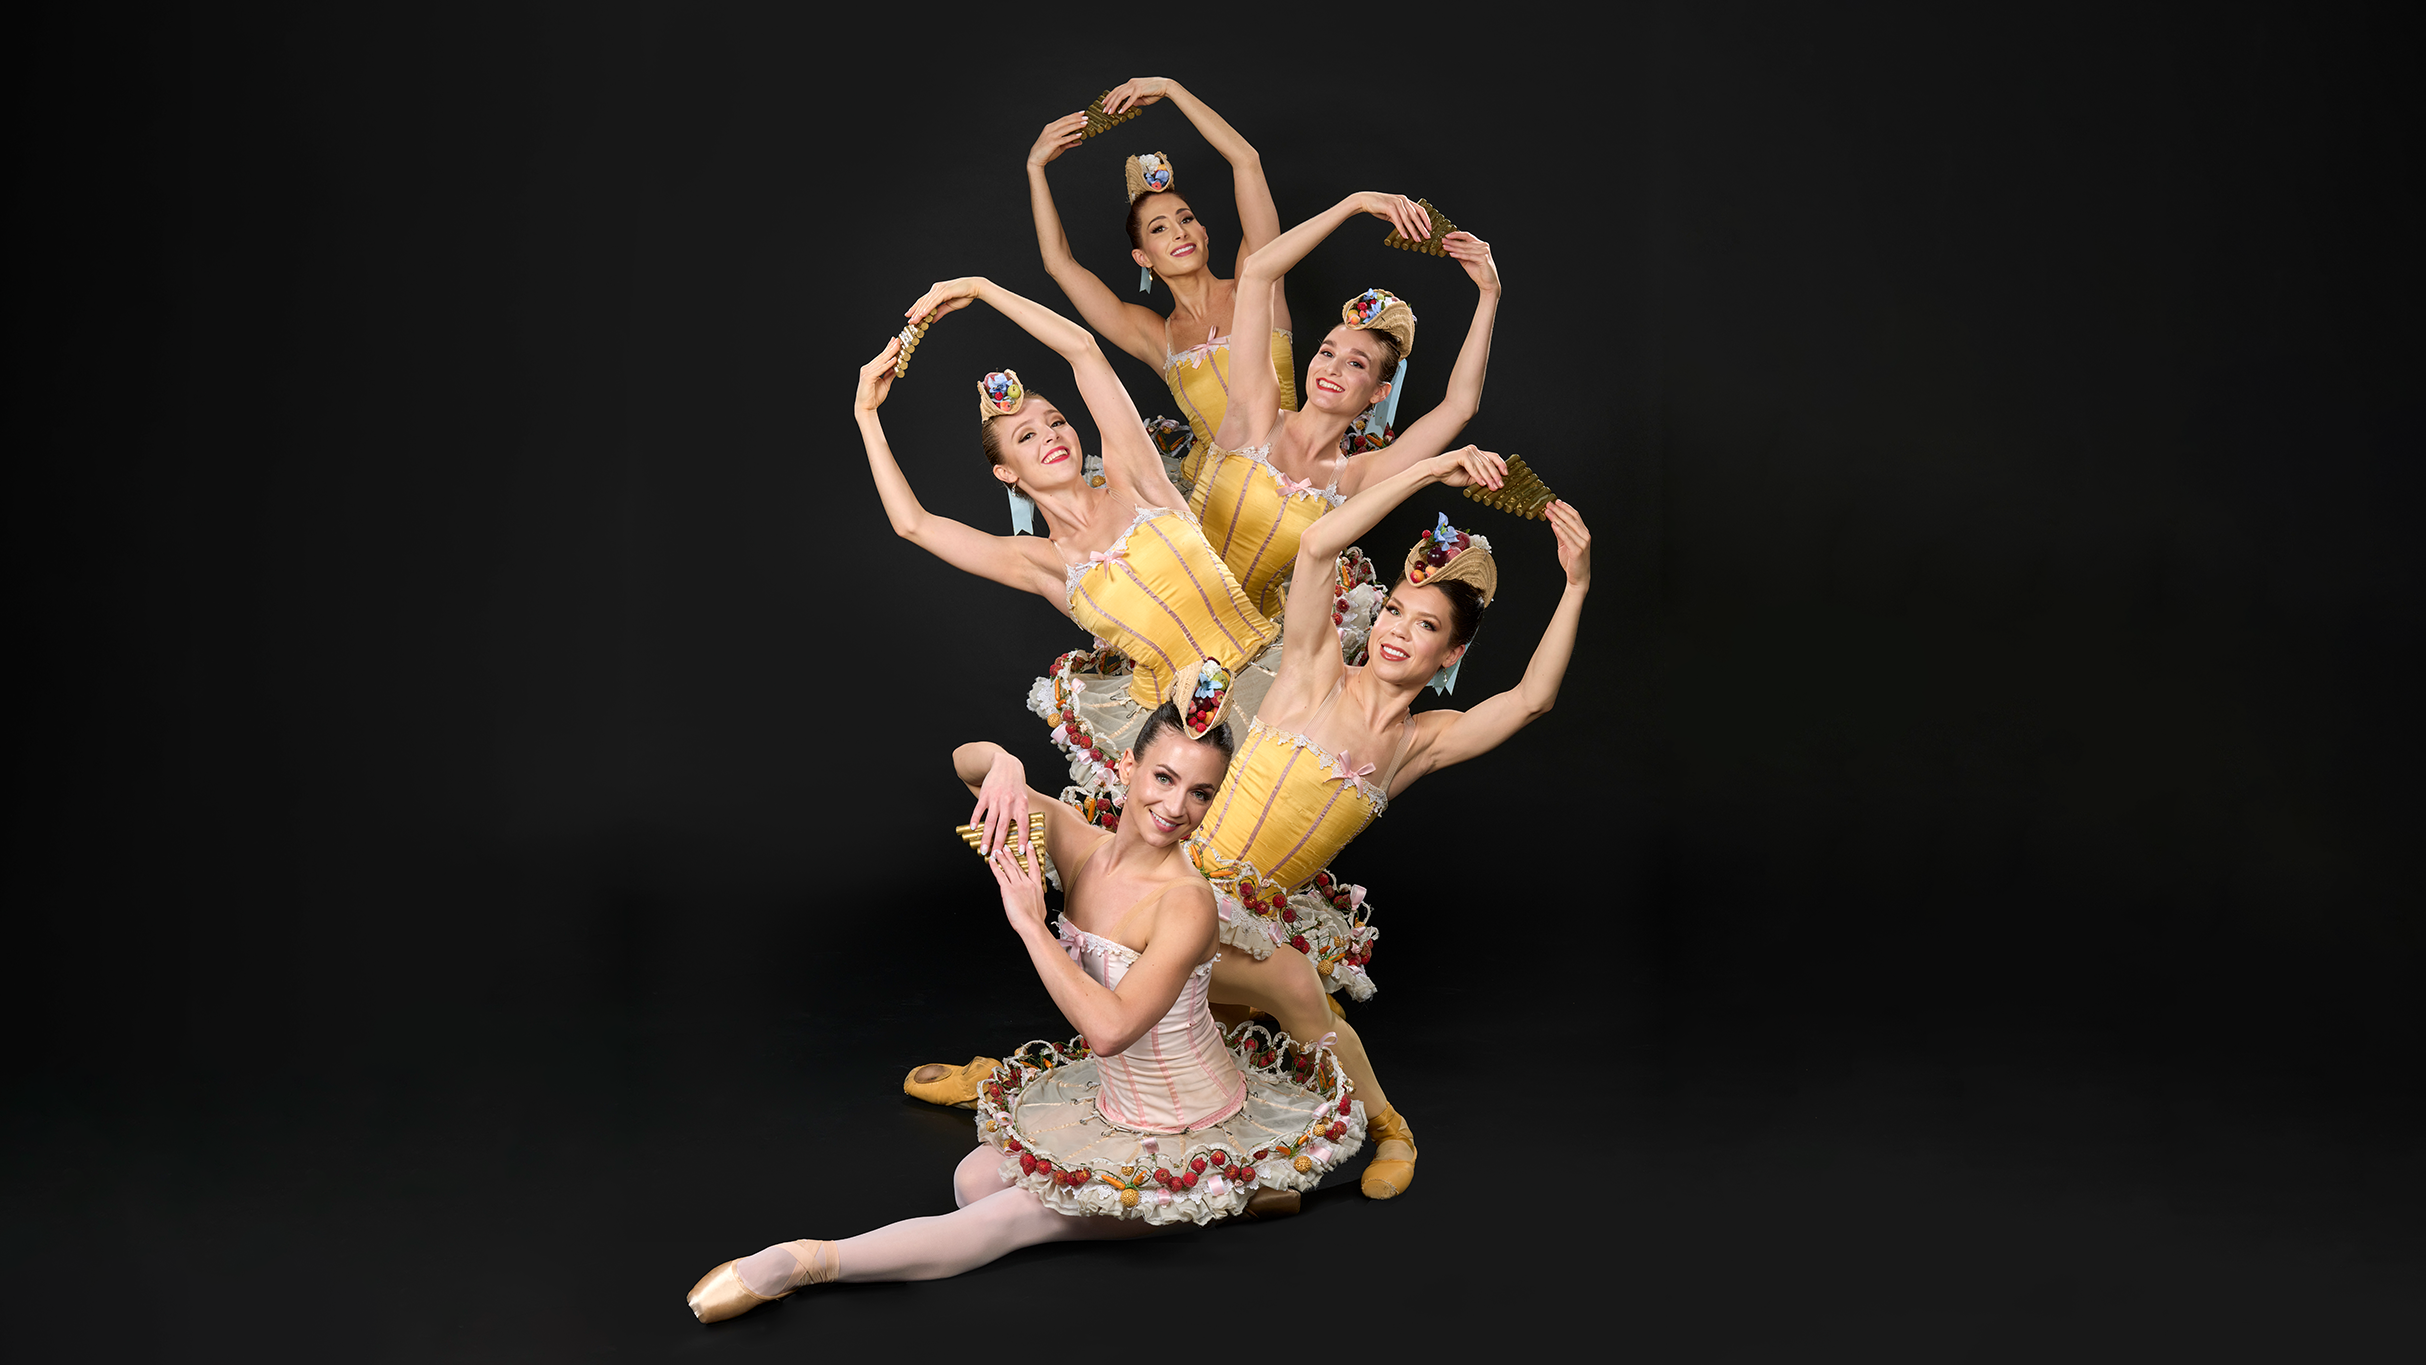 Alabama Ballet Presents George Balanchine's The Nutcracker® in Birmingham promo photo for Cyber Monday presale offer code